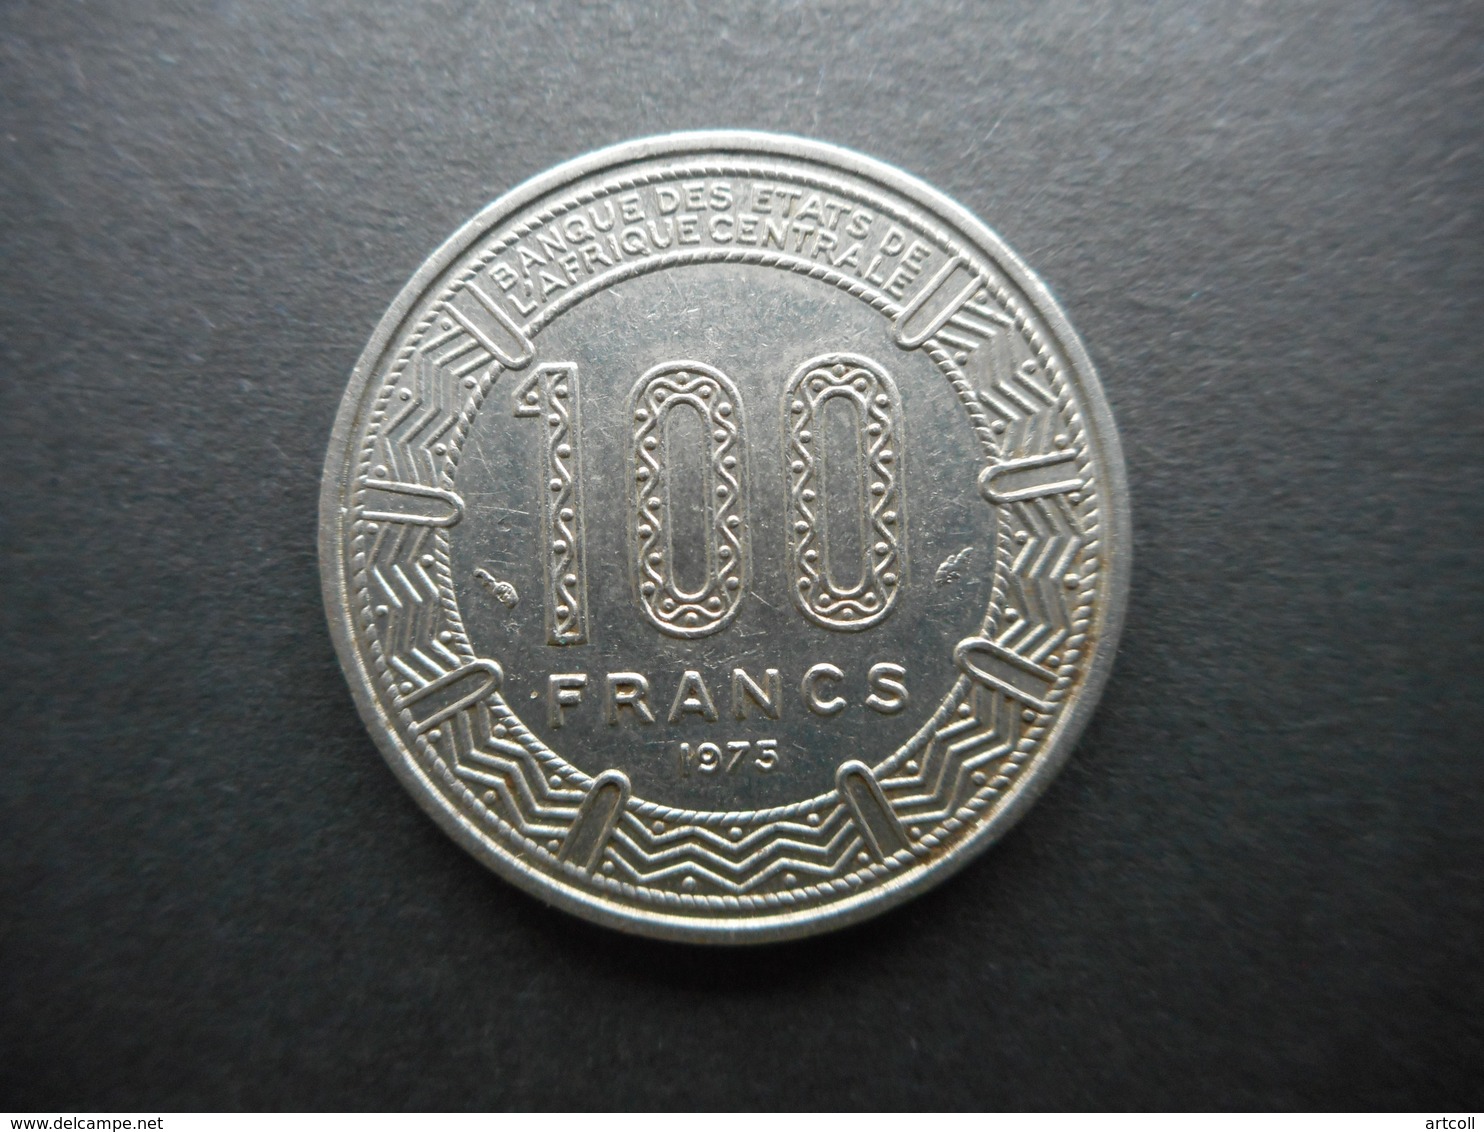 Gabon 100 Francs 1975 - Gabon